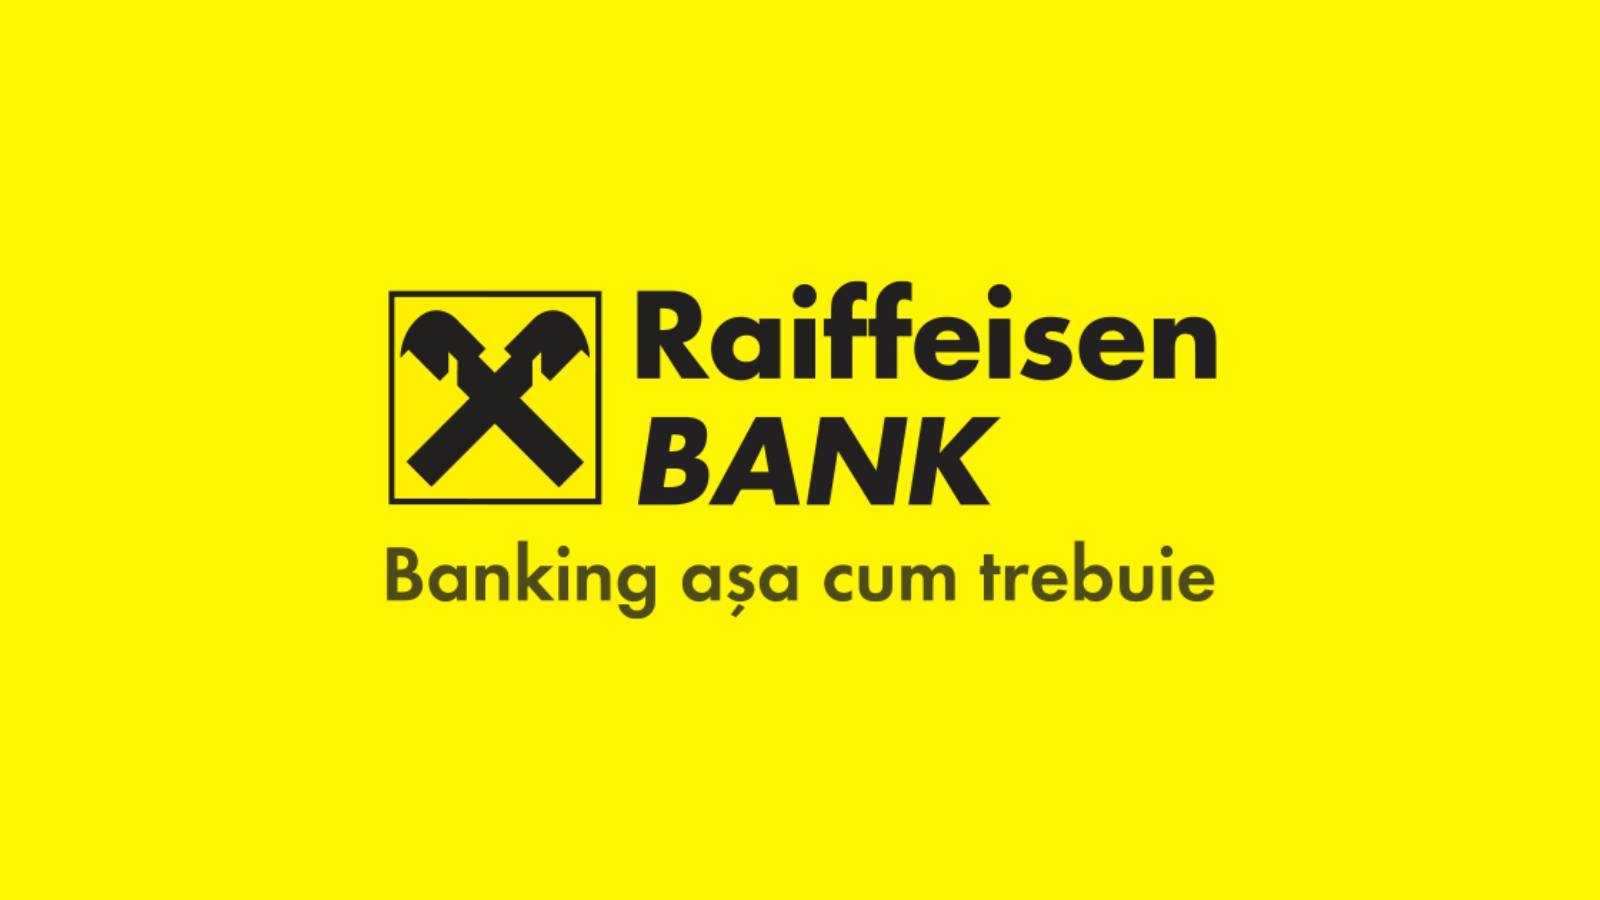 Banco Raiffeisen grande